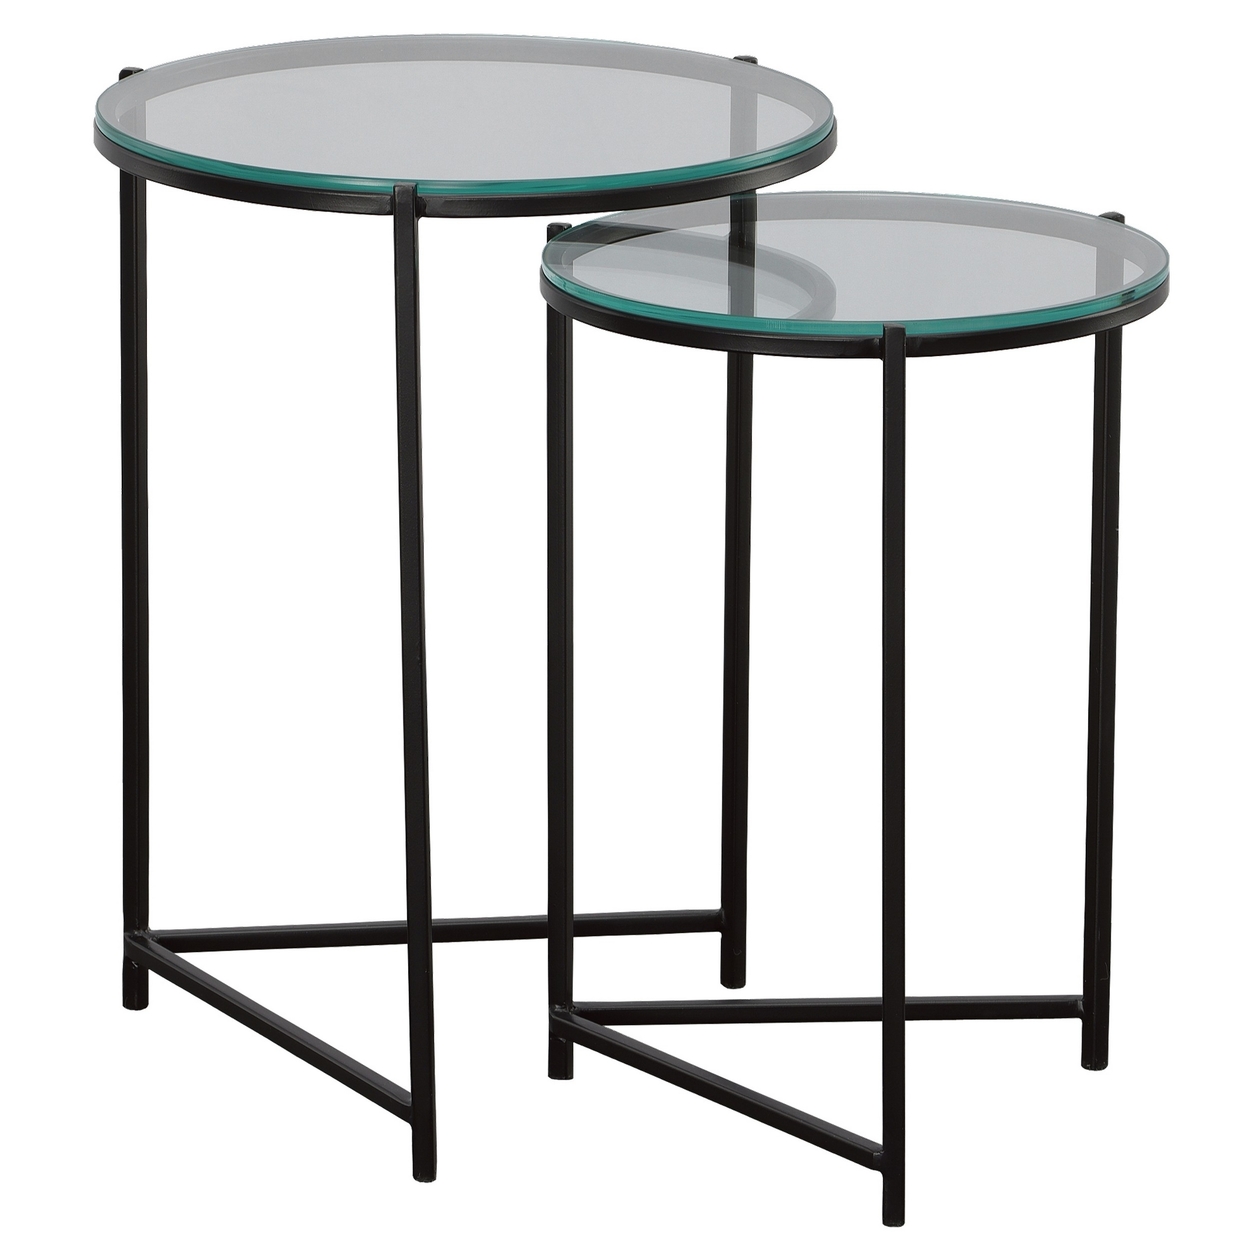 Set Of 2 Nesting Tables, Round Clear Tempered Glass Tabletop, Black Frame -Saltoro Sherpi